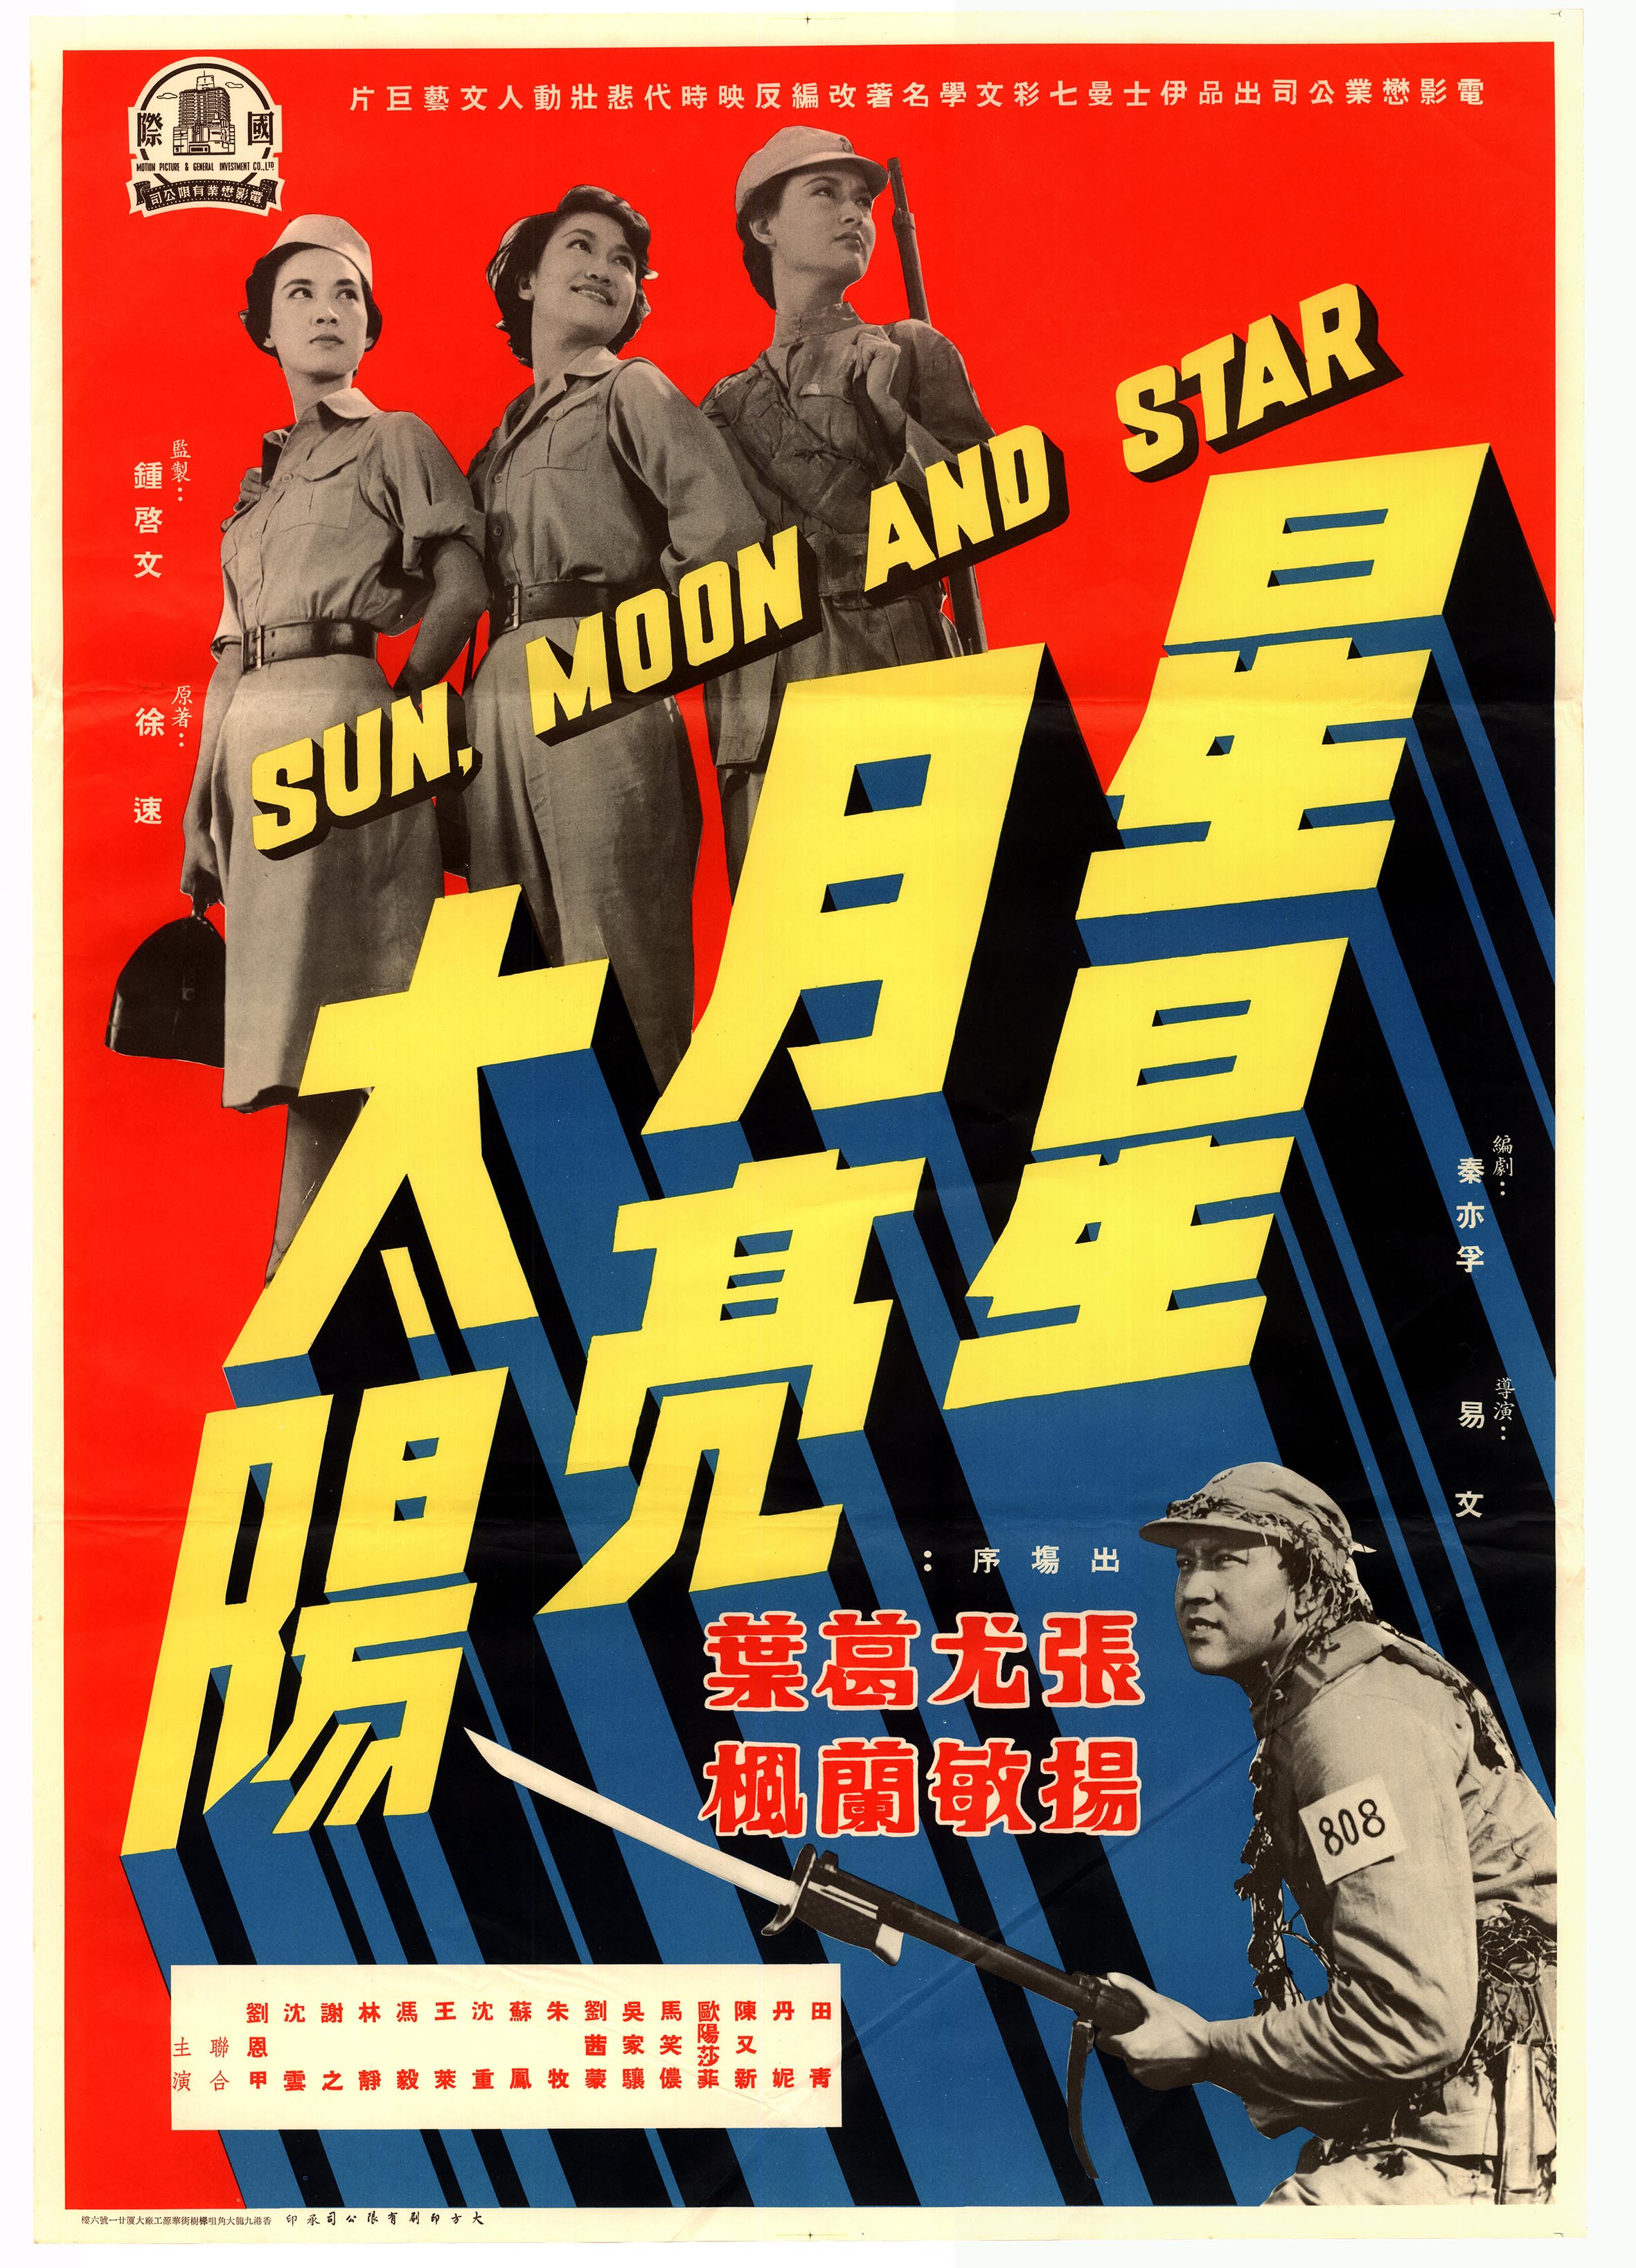 Cine Memories of the War of National Resistance